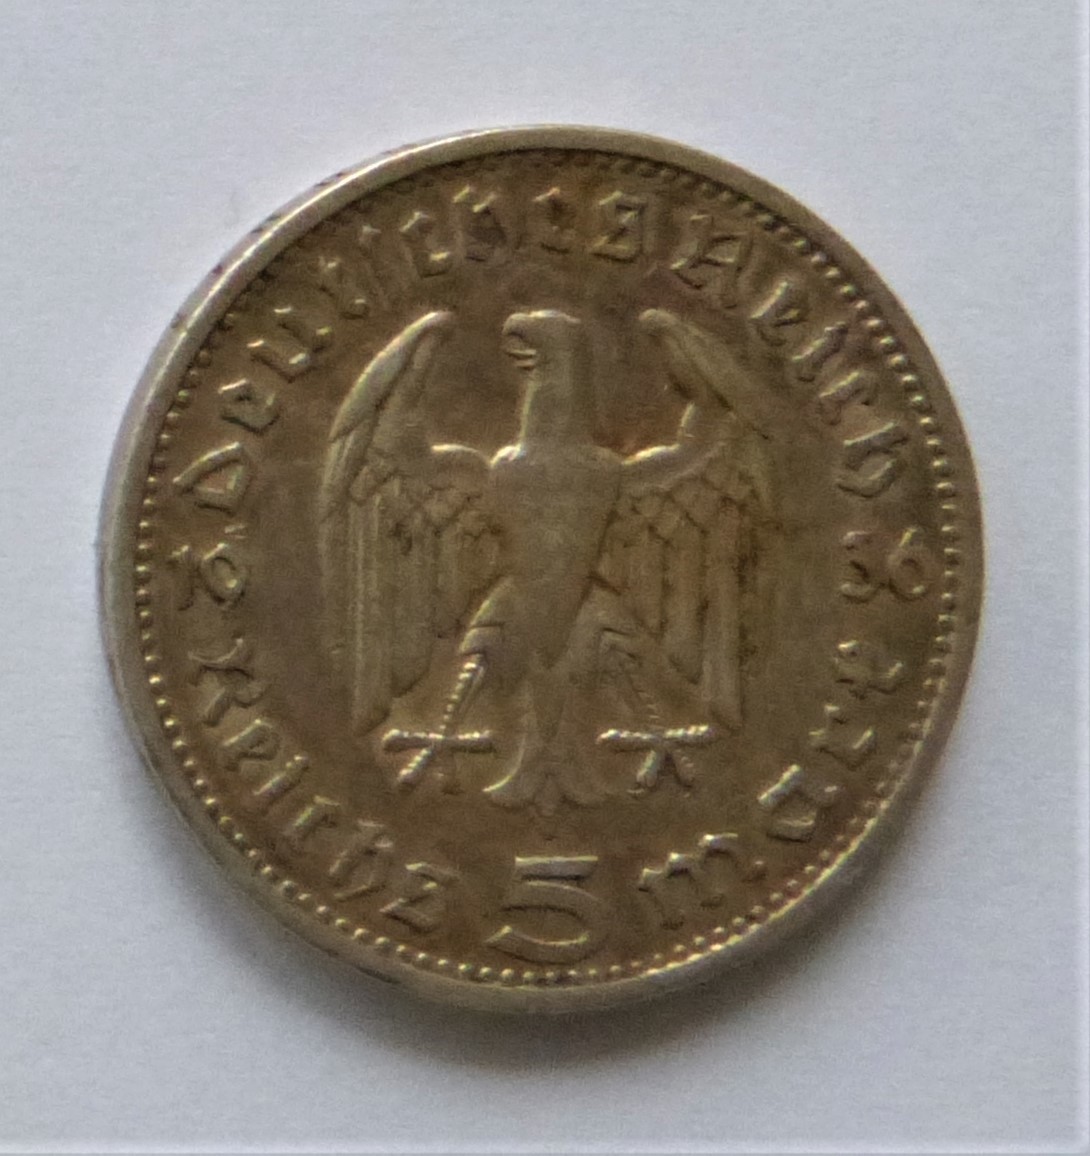 Münze: 5-Mark-Stück (Städt. Hellweg-Museum Geseke CC BY-NC-SA)